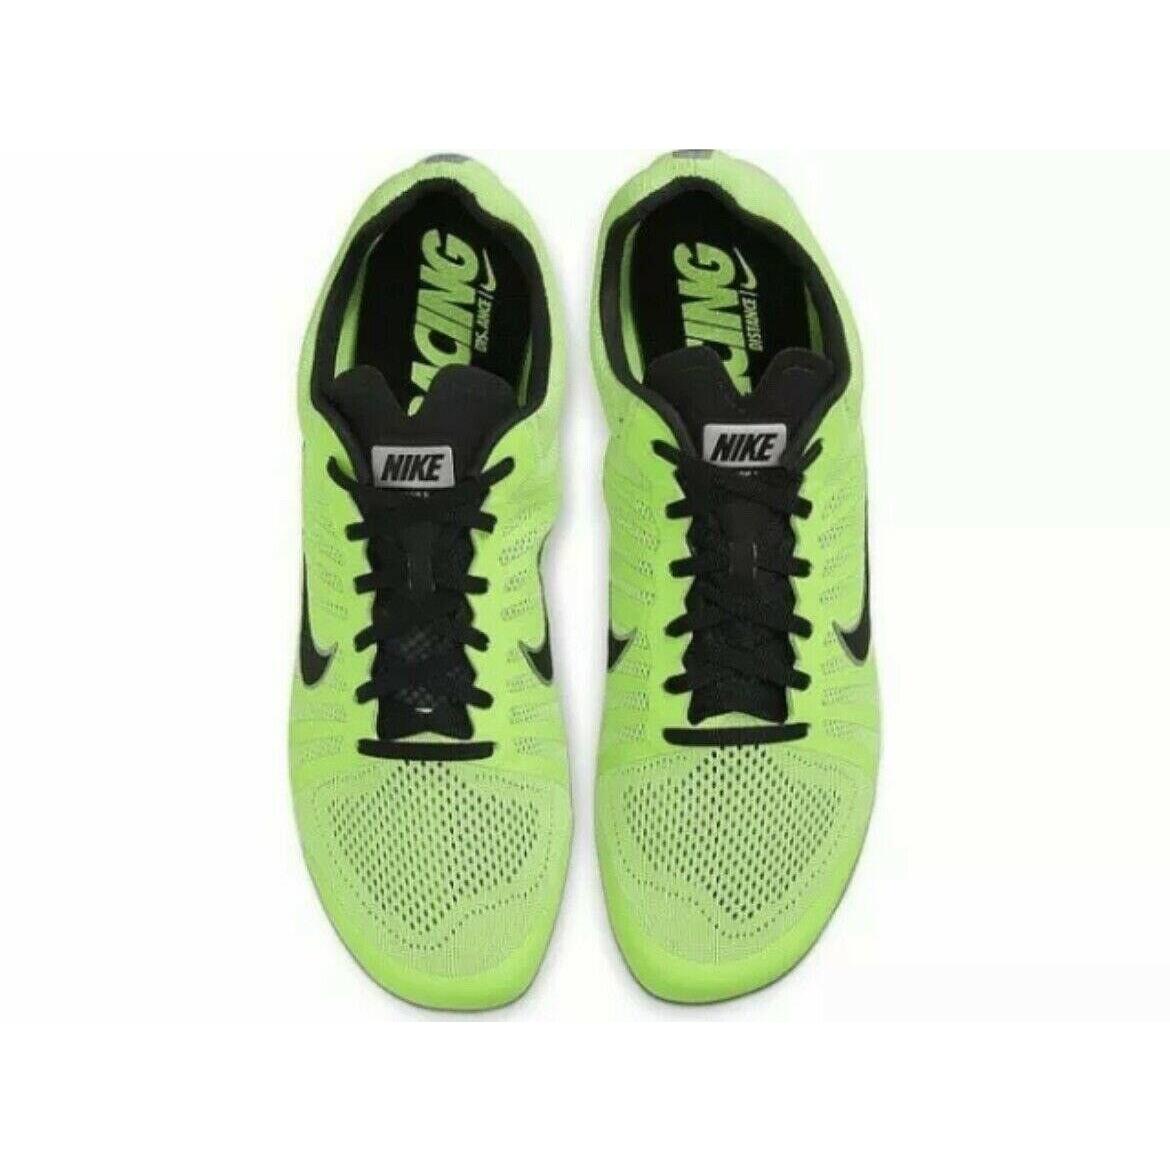 Nike shoes Zoom - Green 1